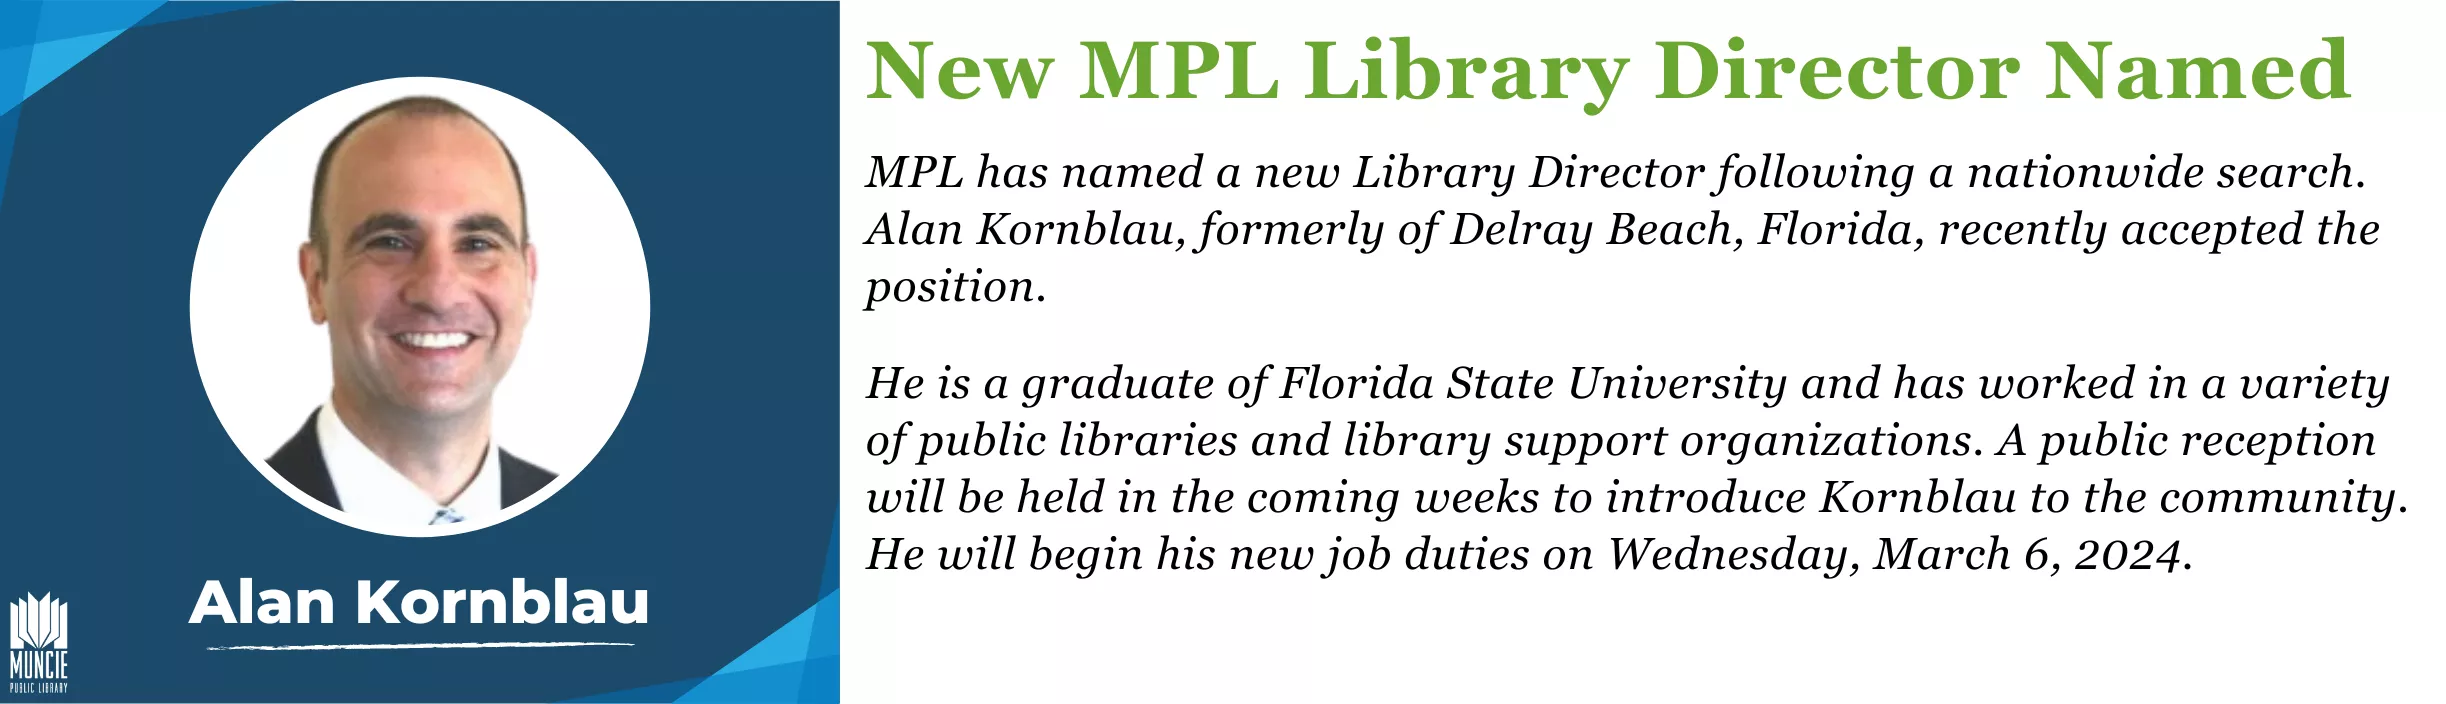 MPL announces new Library Director, Alan Kornblau.